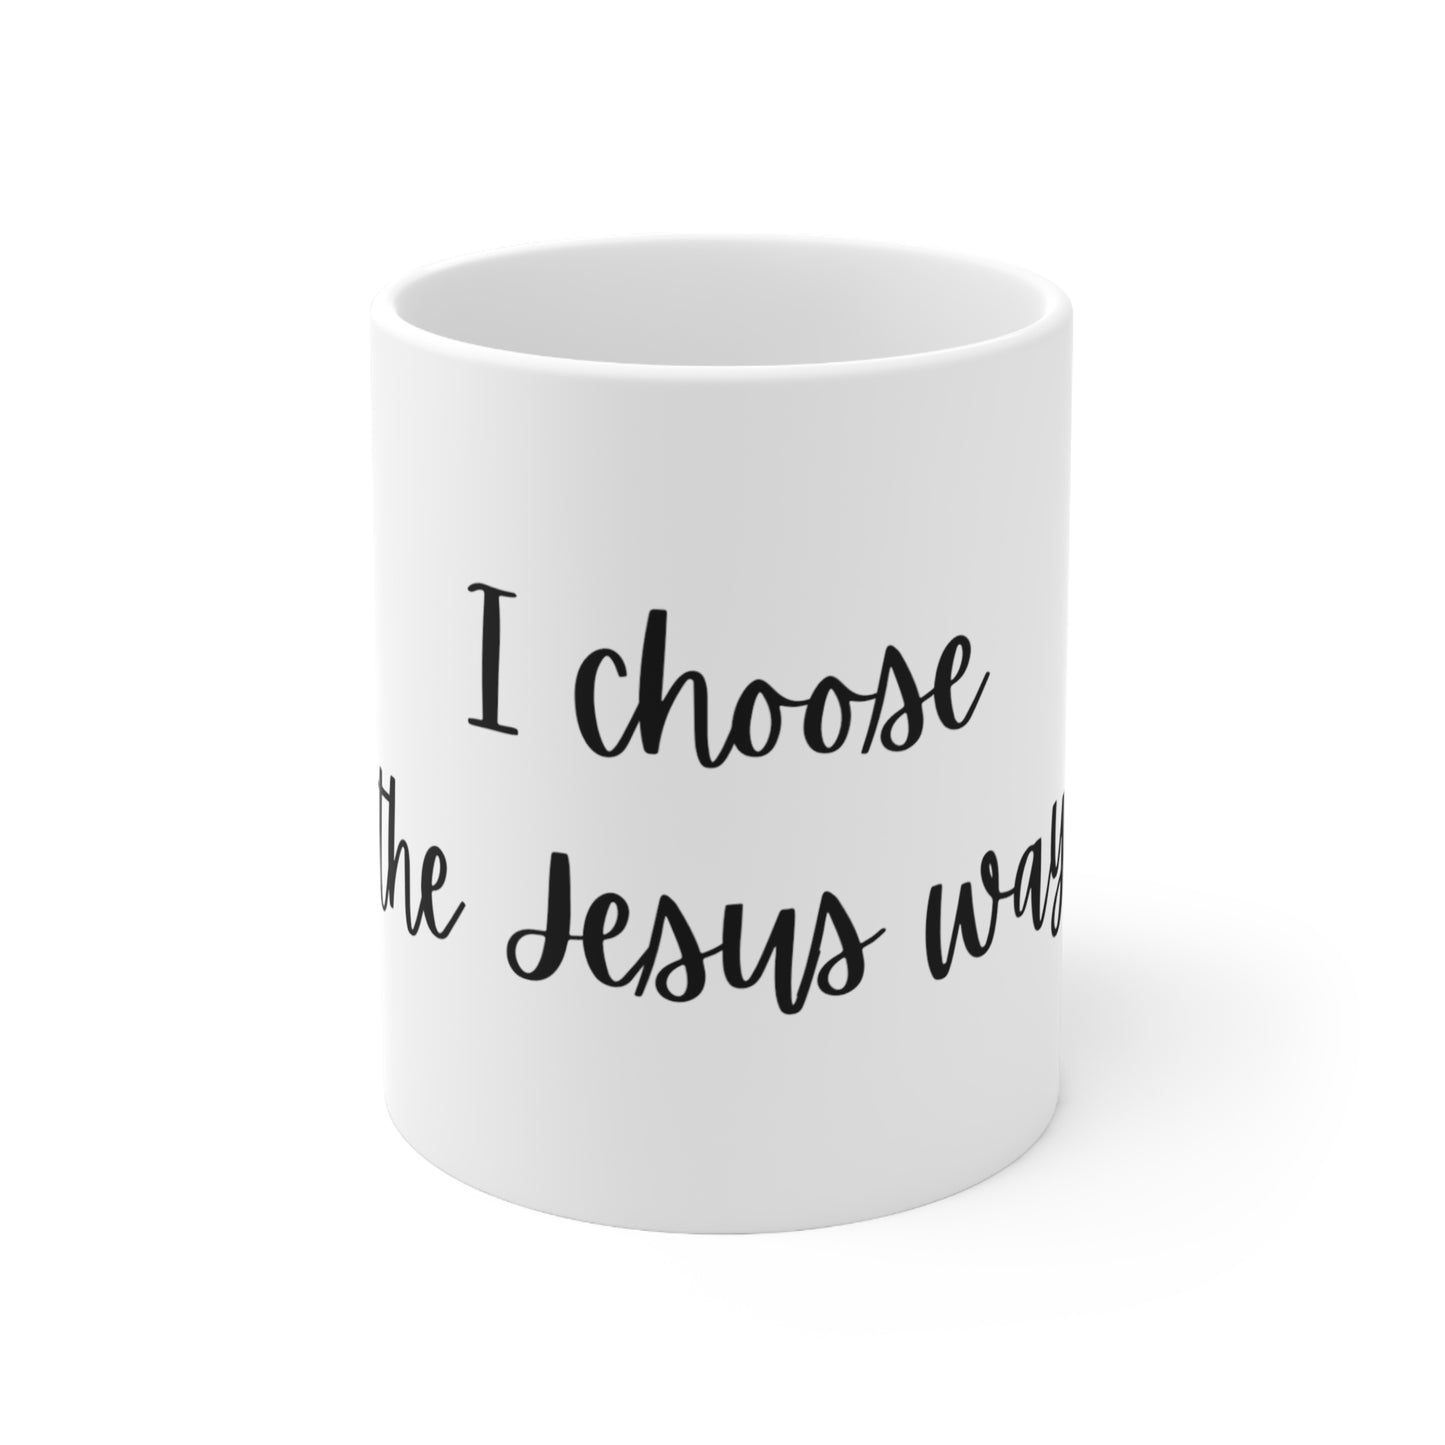 I choose the Jesus way - Ceramic Mug 11oz